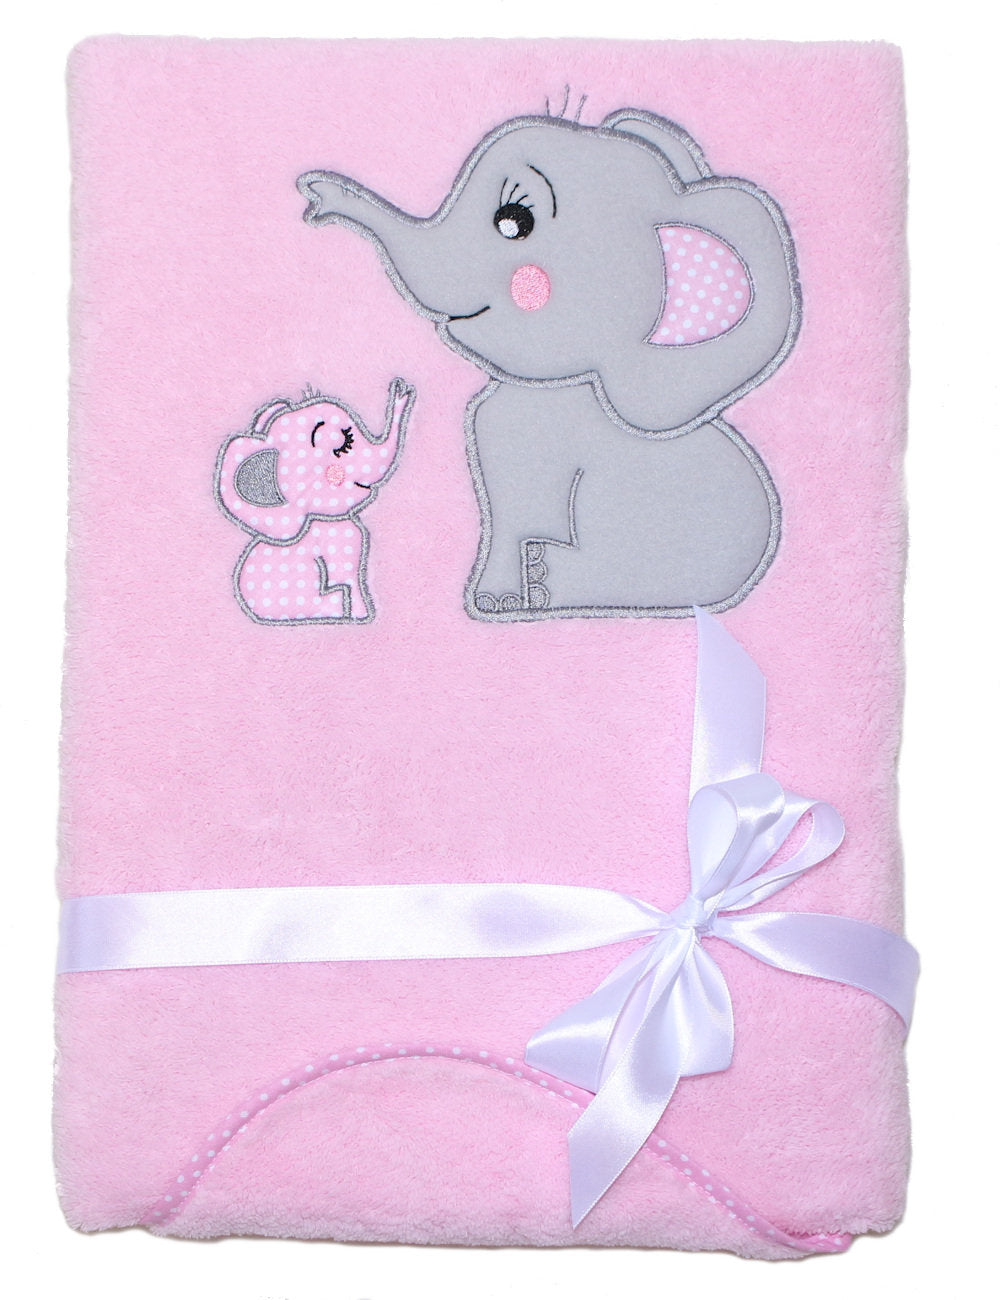 Babydecke mit Namen bestickt -Elefanten Rosa- Kuscheldecke